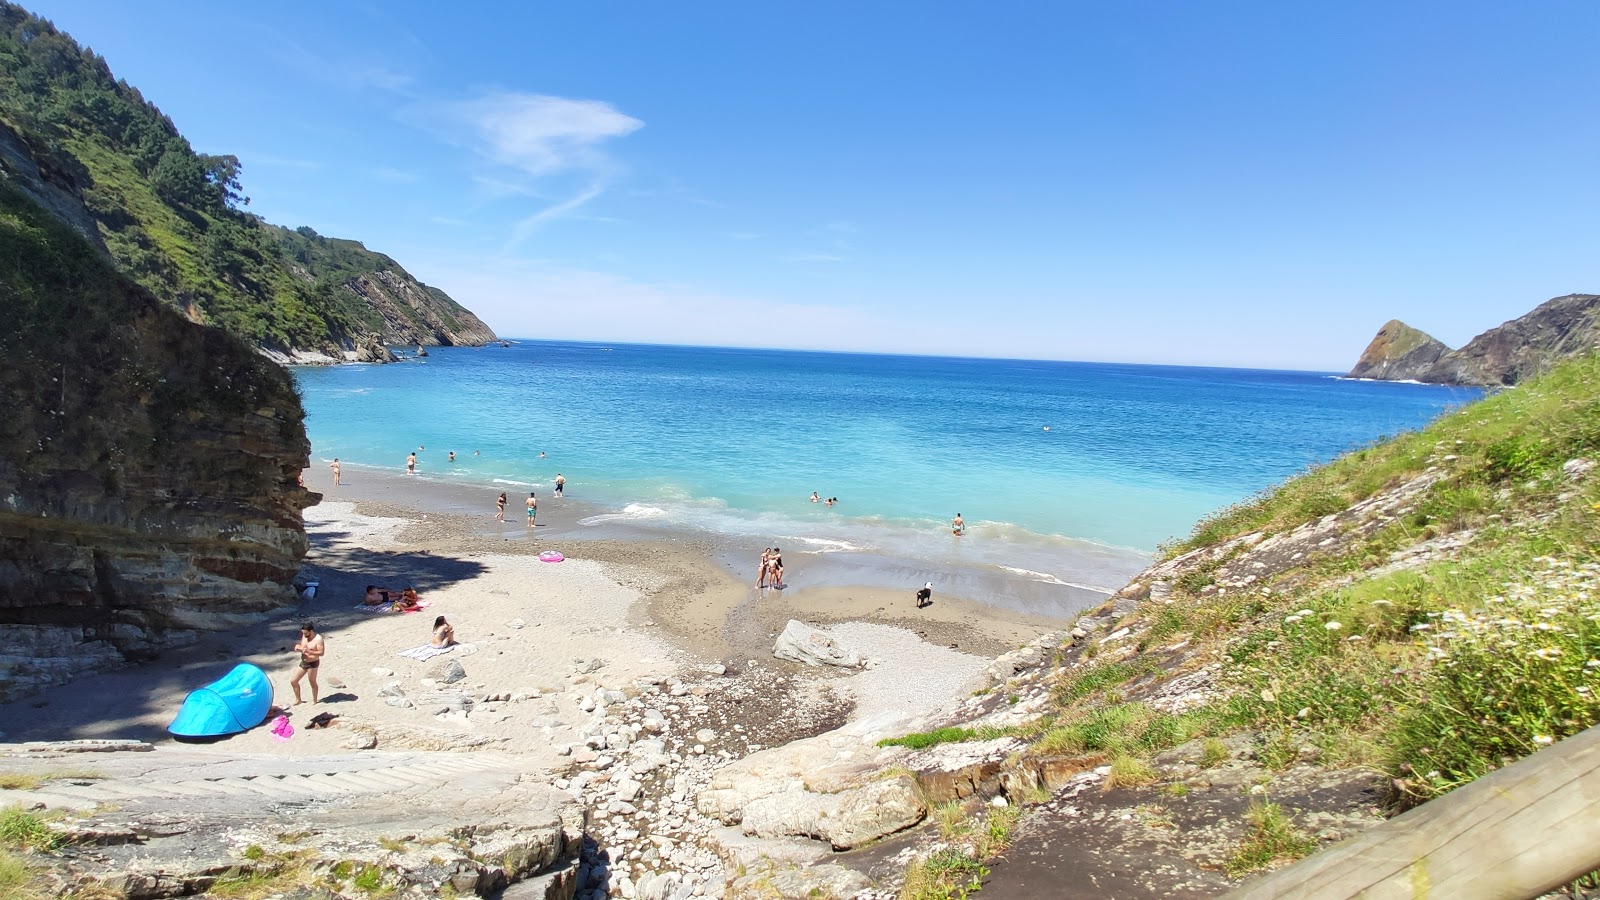 Photo of Oleiros Beach with gray pebble surface